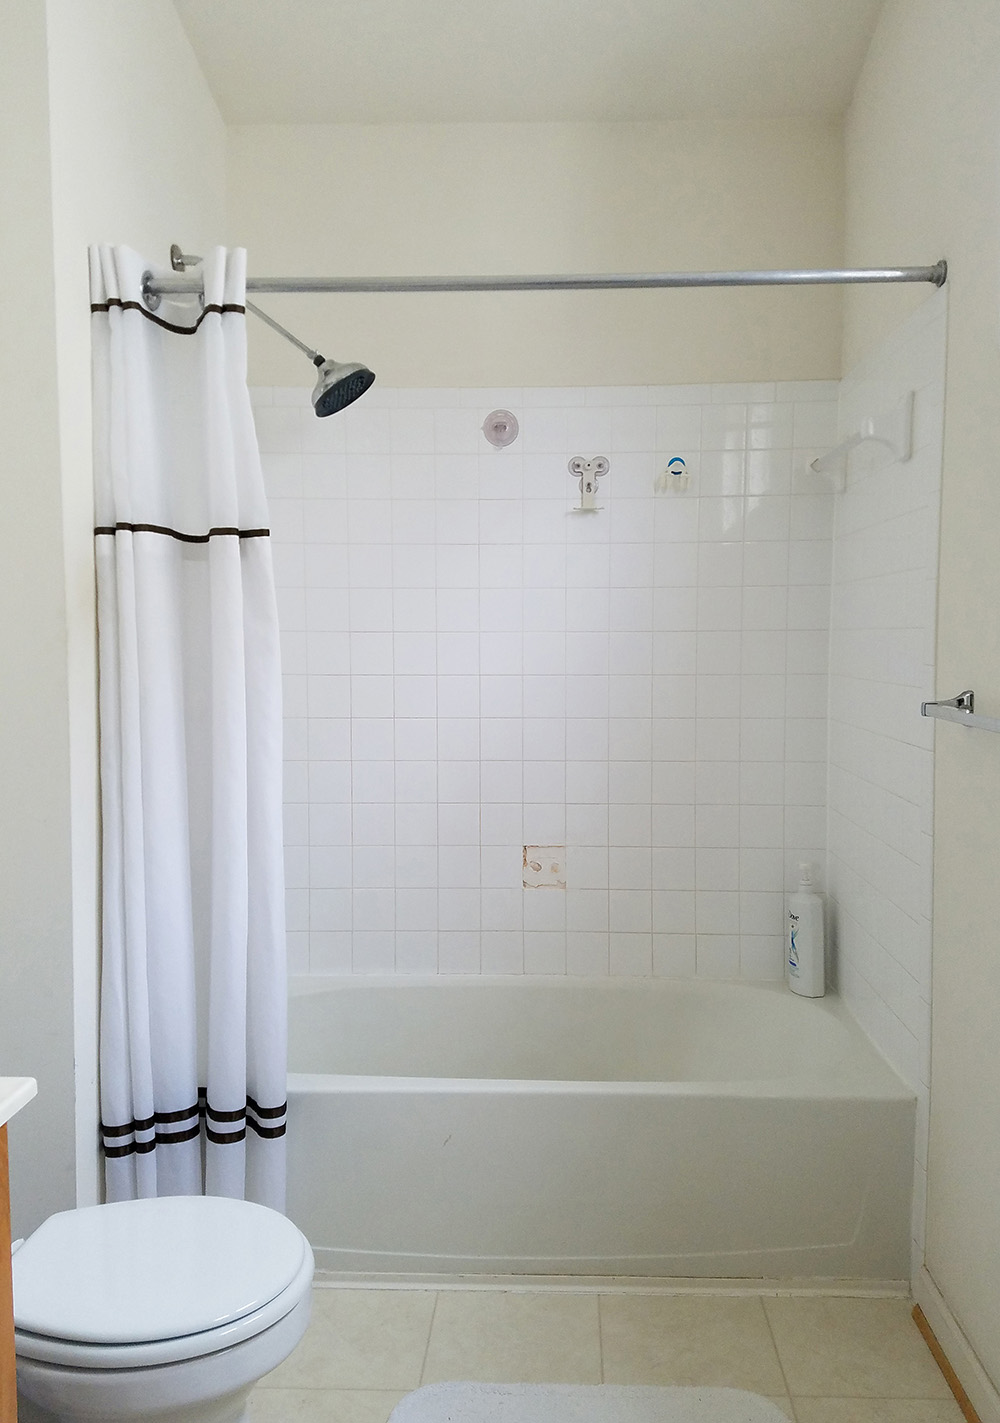 Six Step Walk-In Shower Install